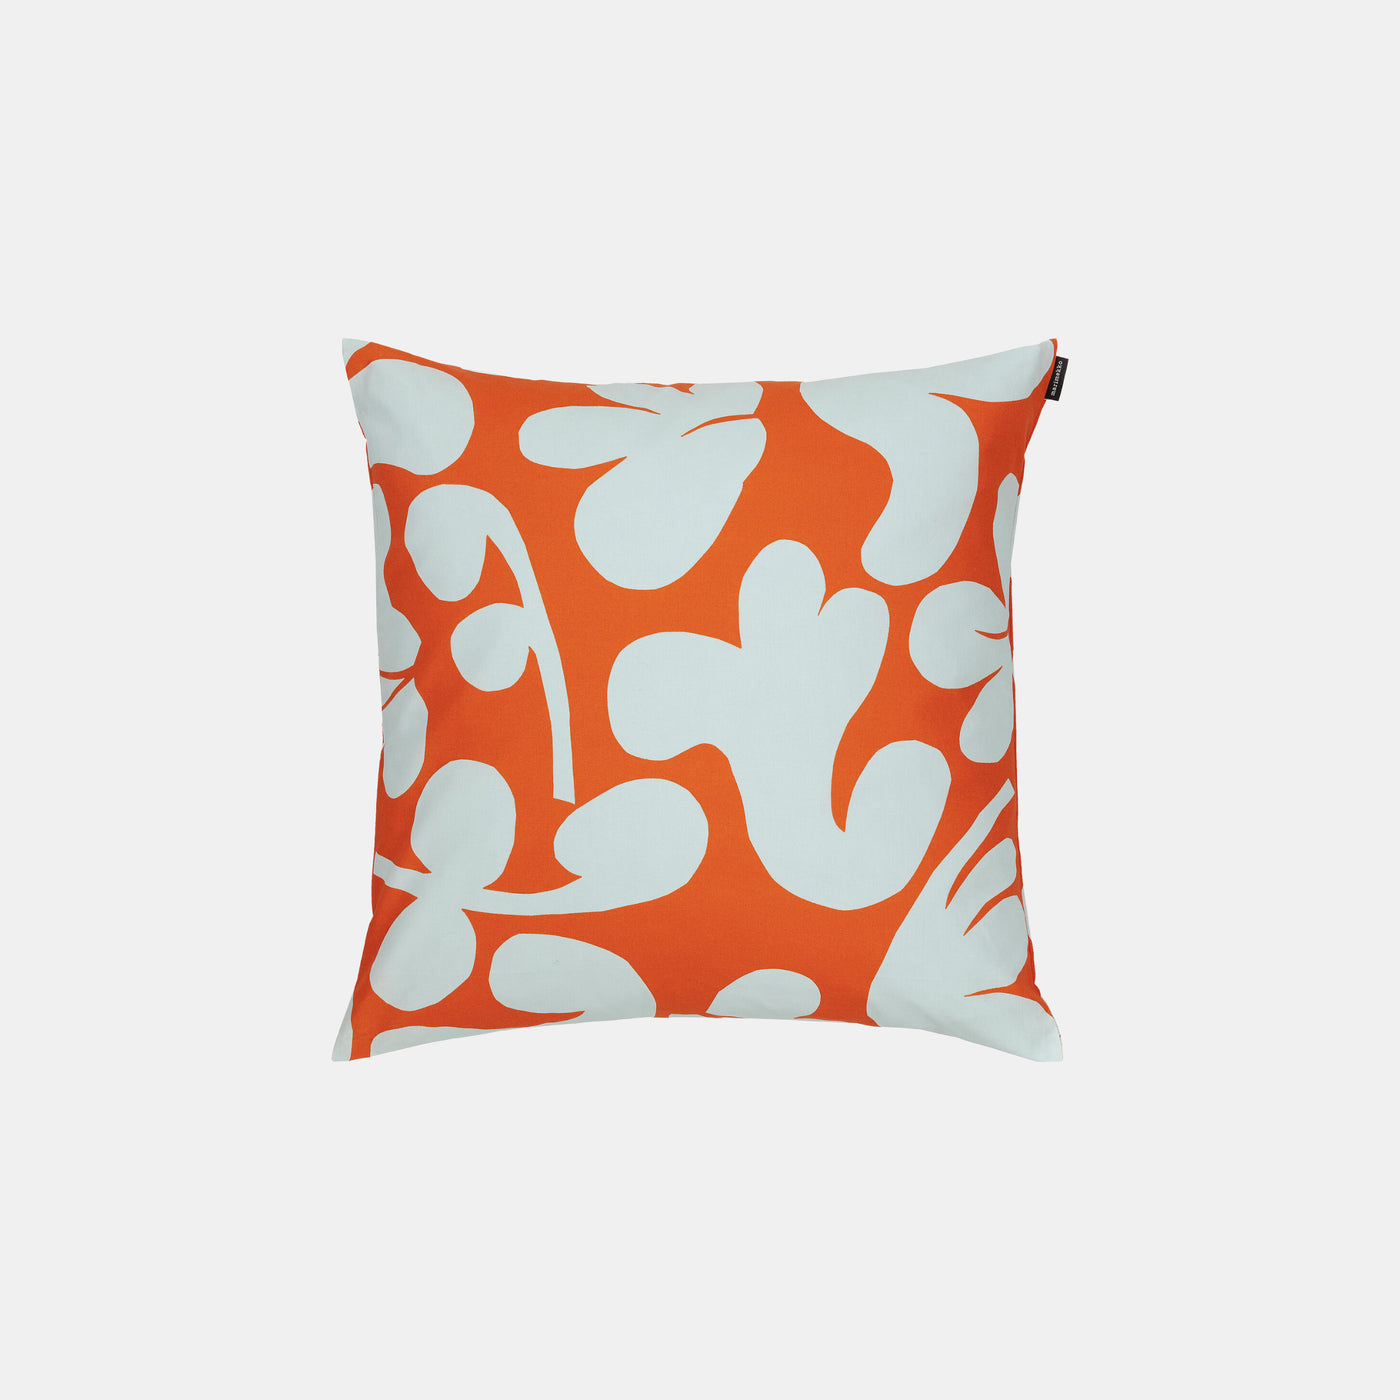 Leikko Cushion Cover 50x50cm - light blue, orange